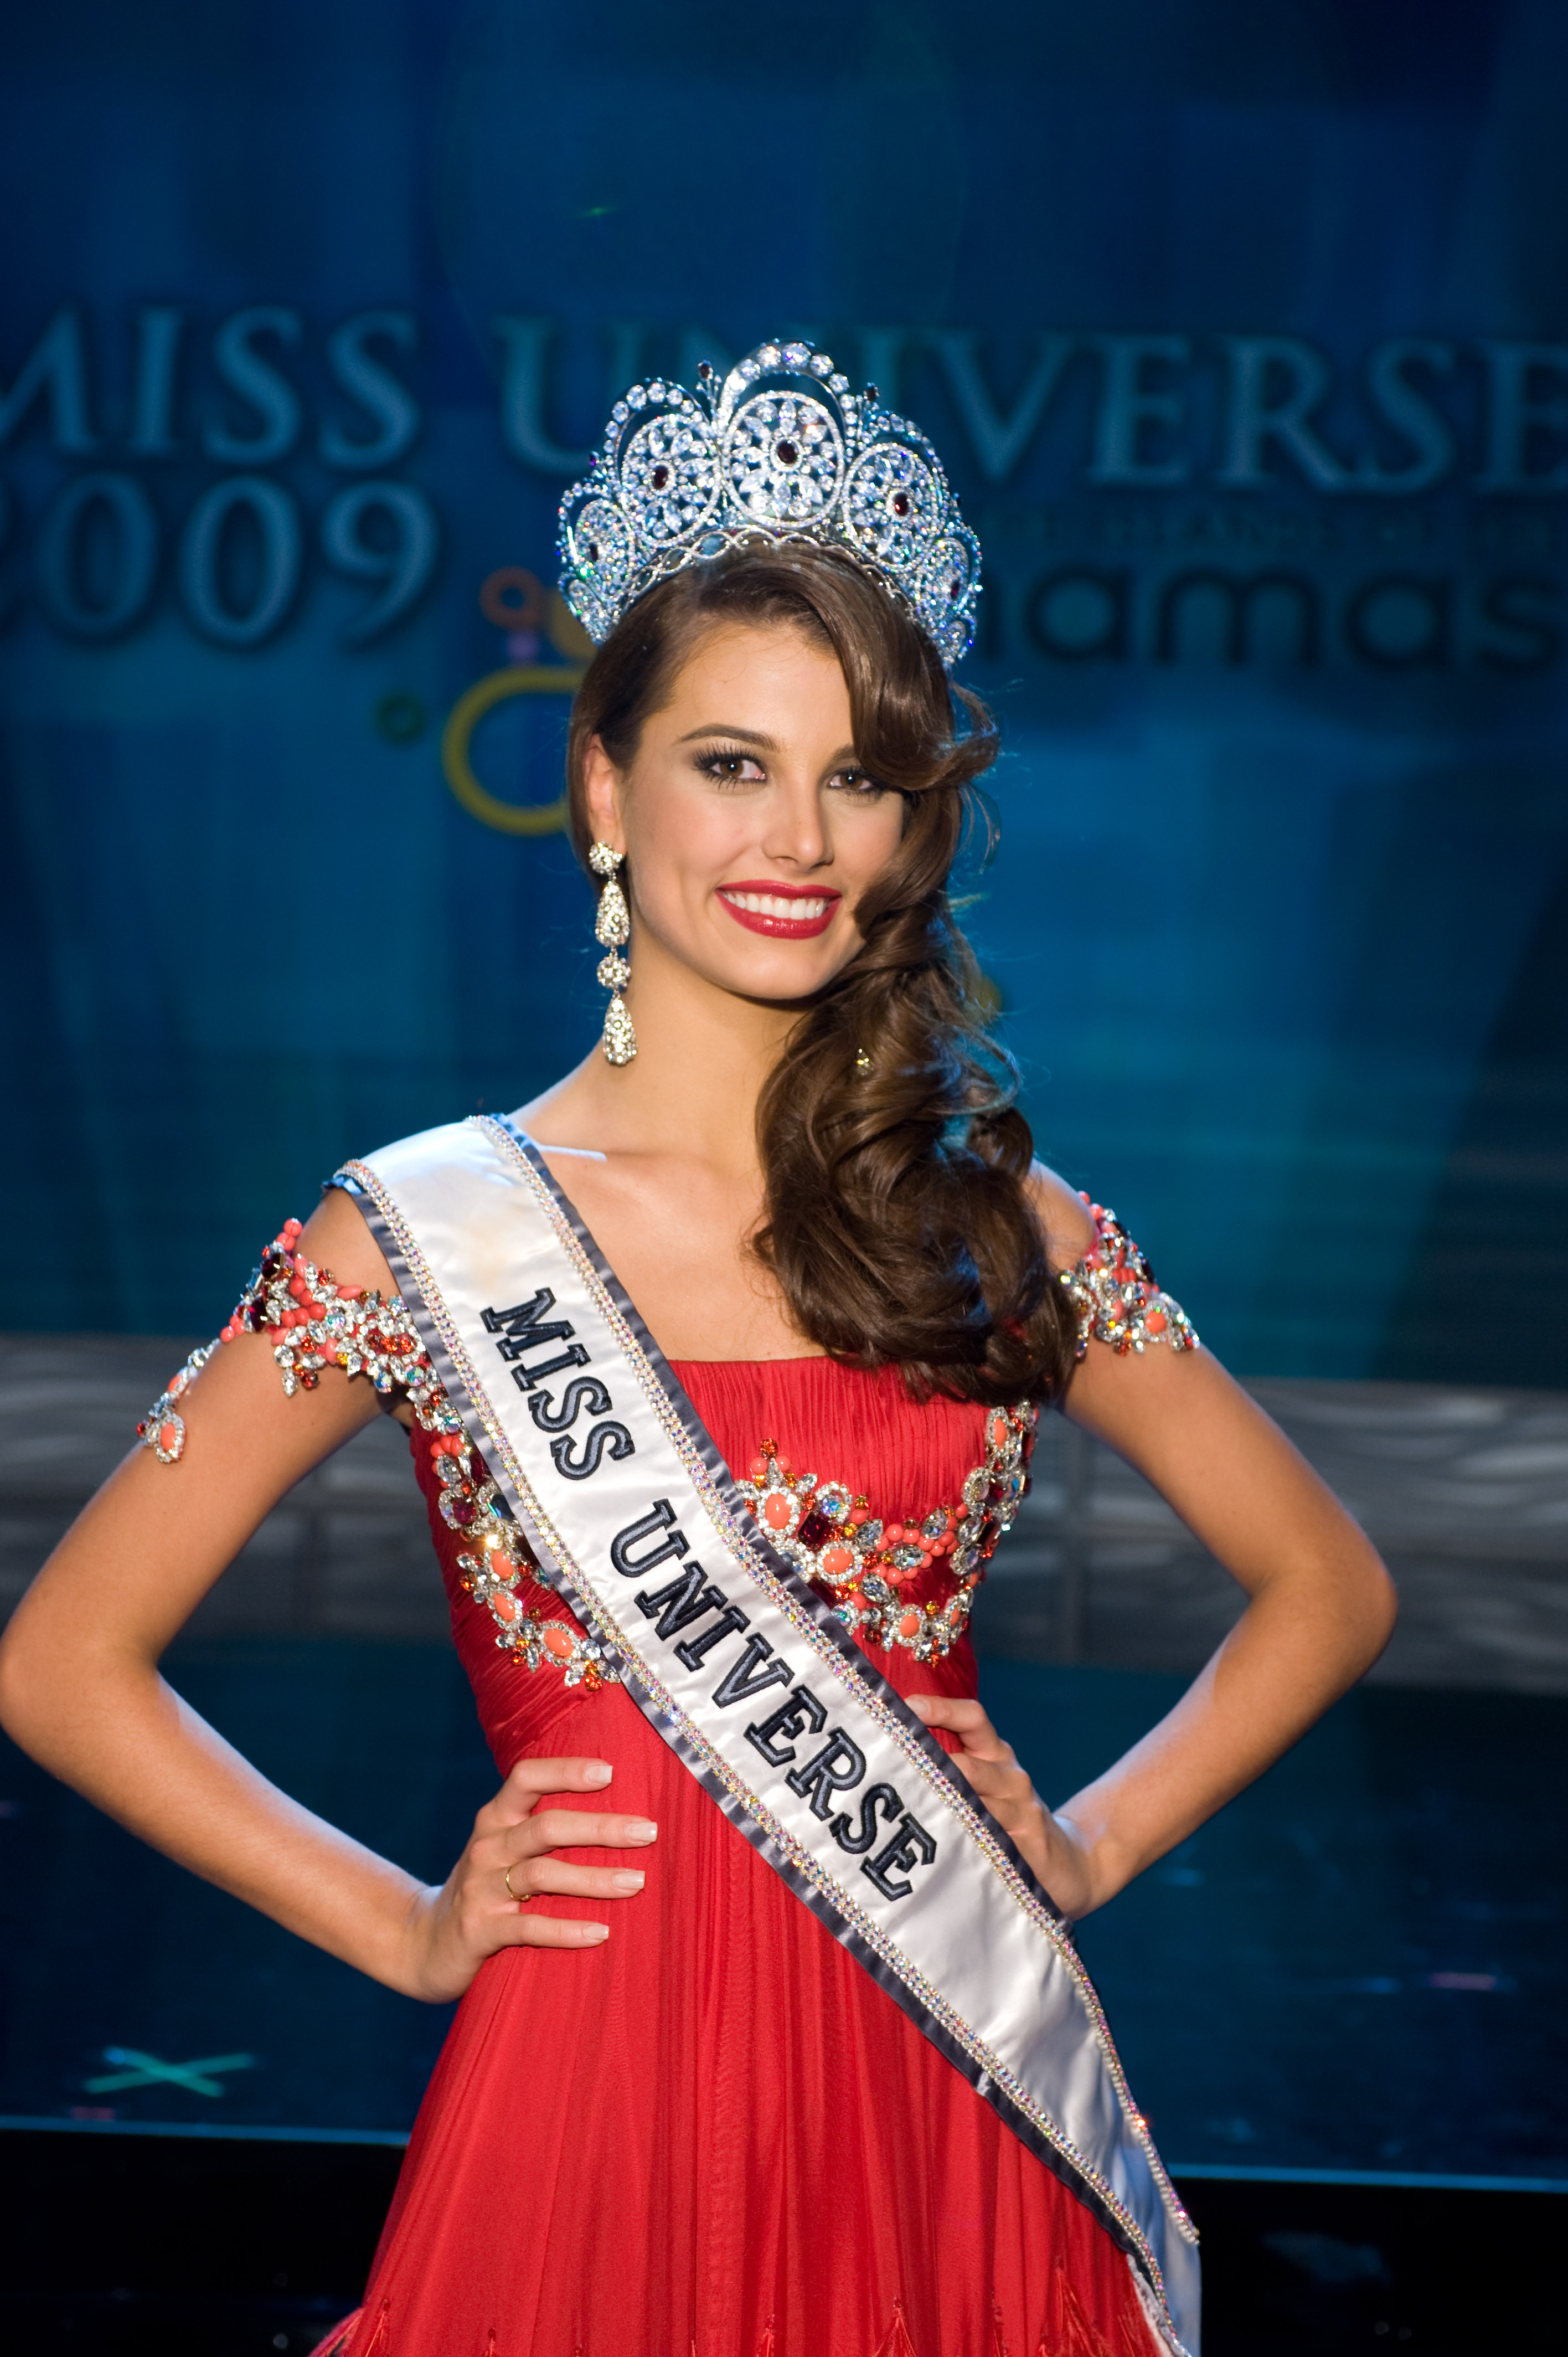 PHOTO RECAP: Miss Universe 2015 coronation night